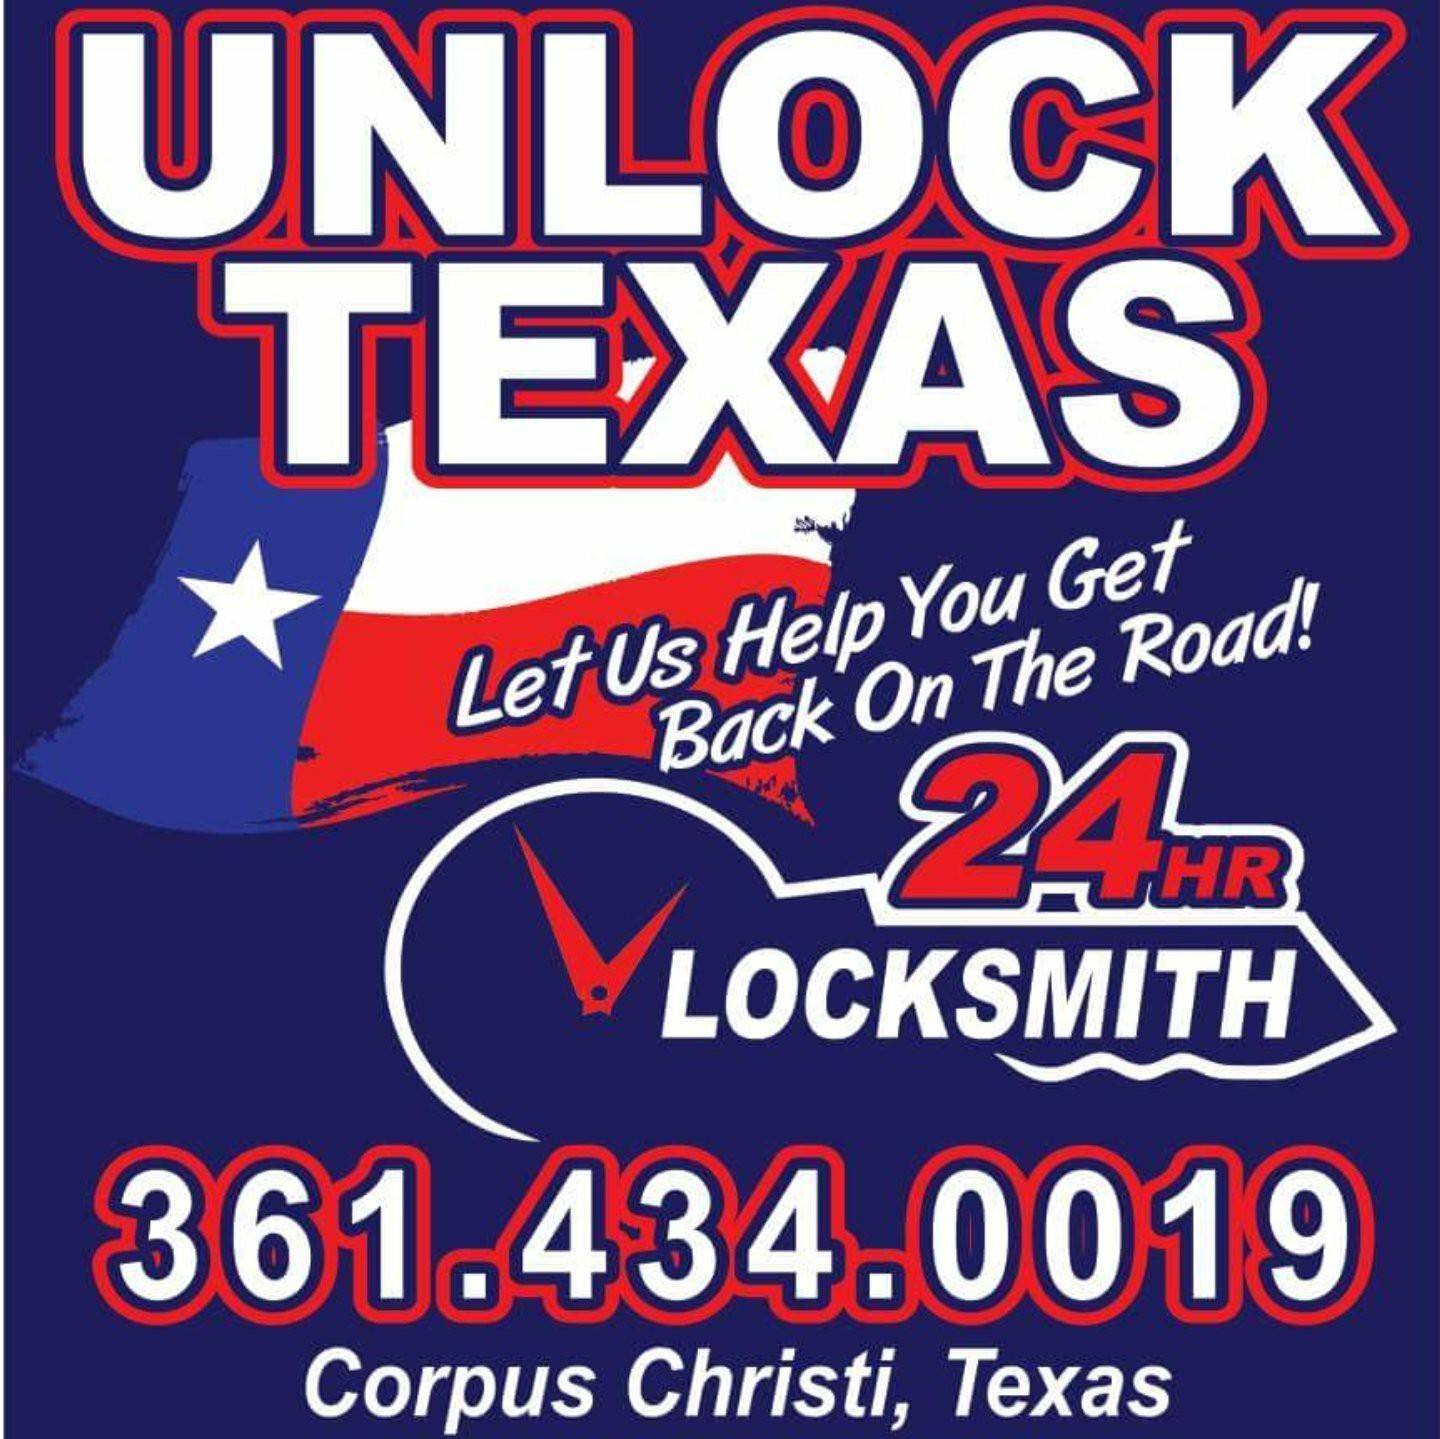 Unlock Texas